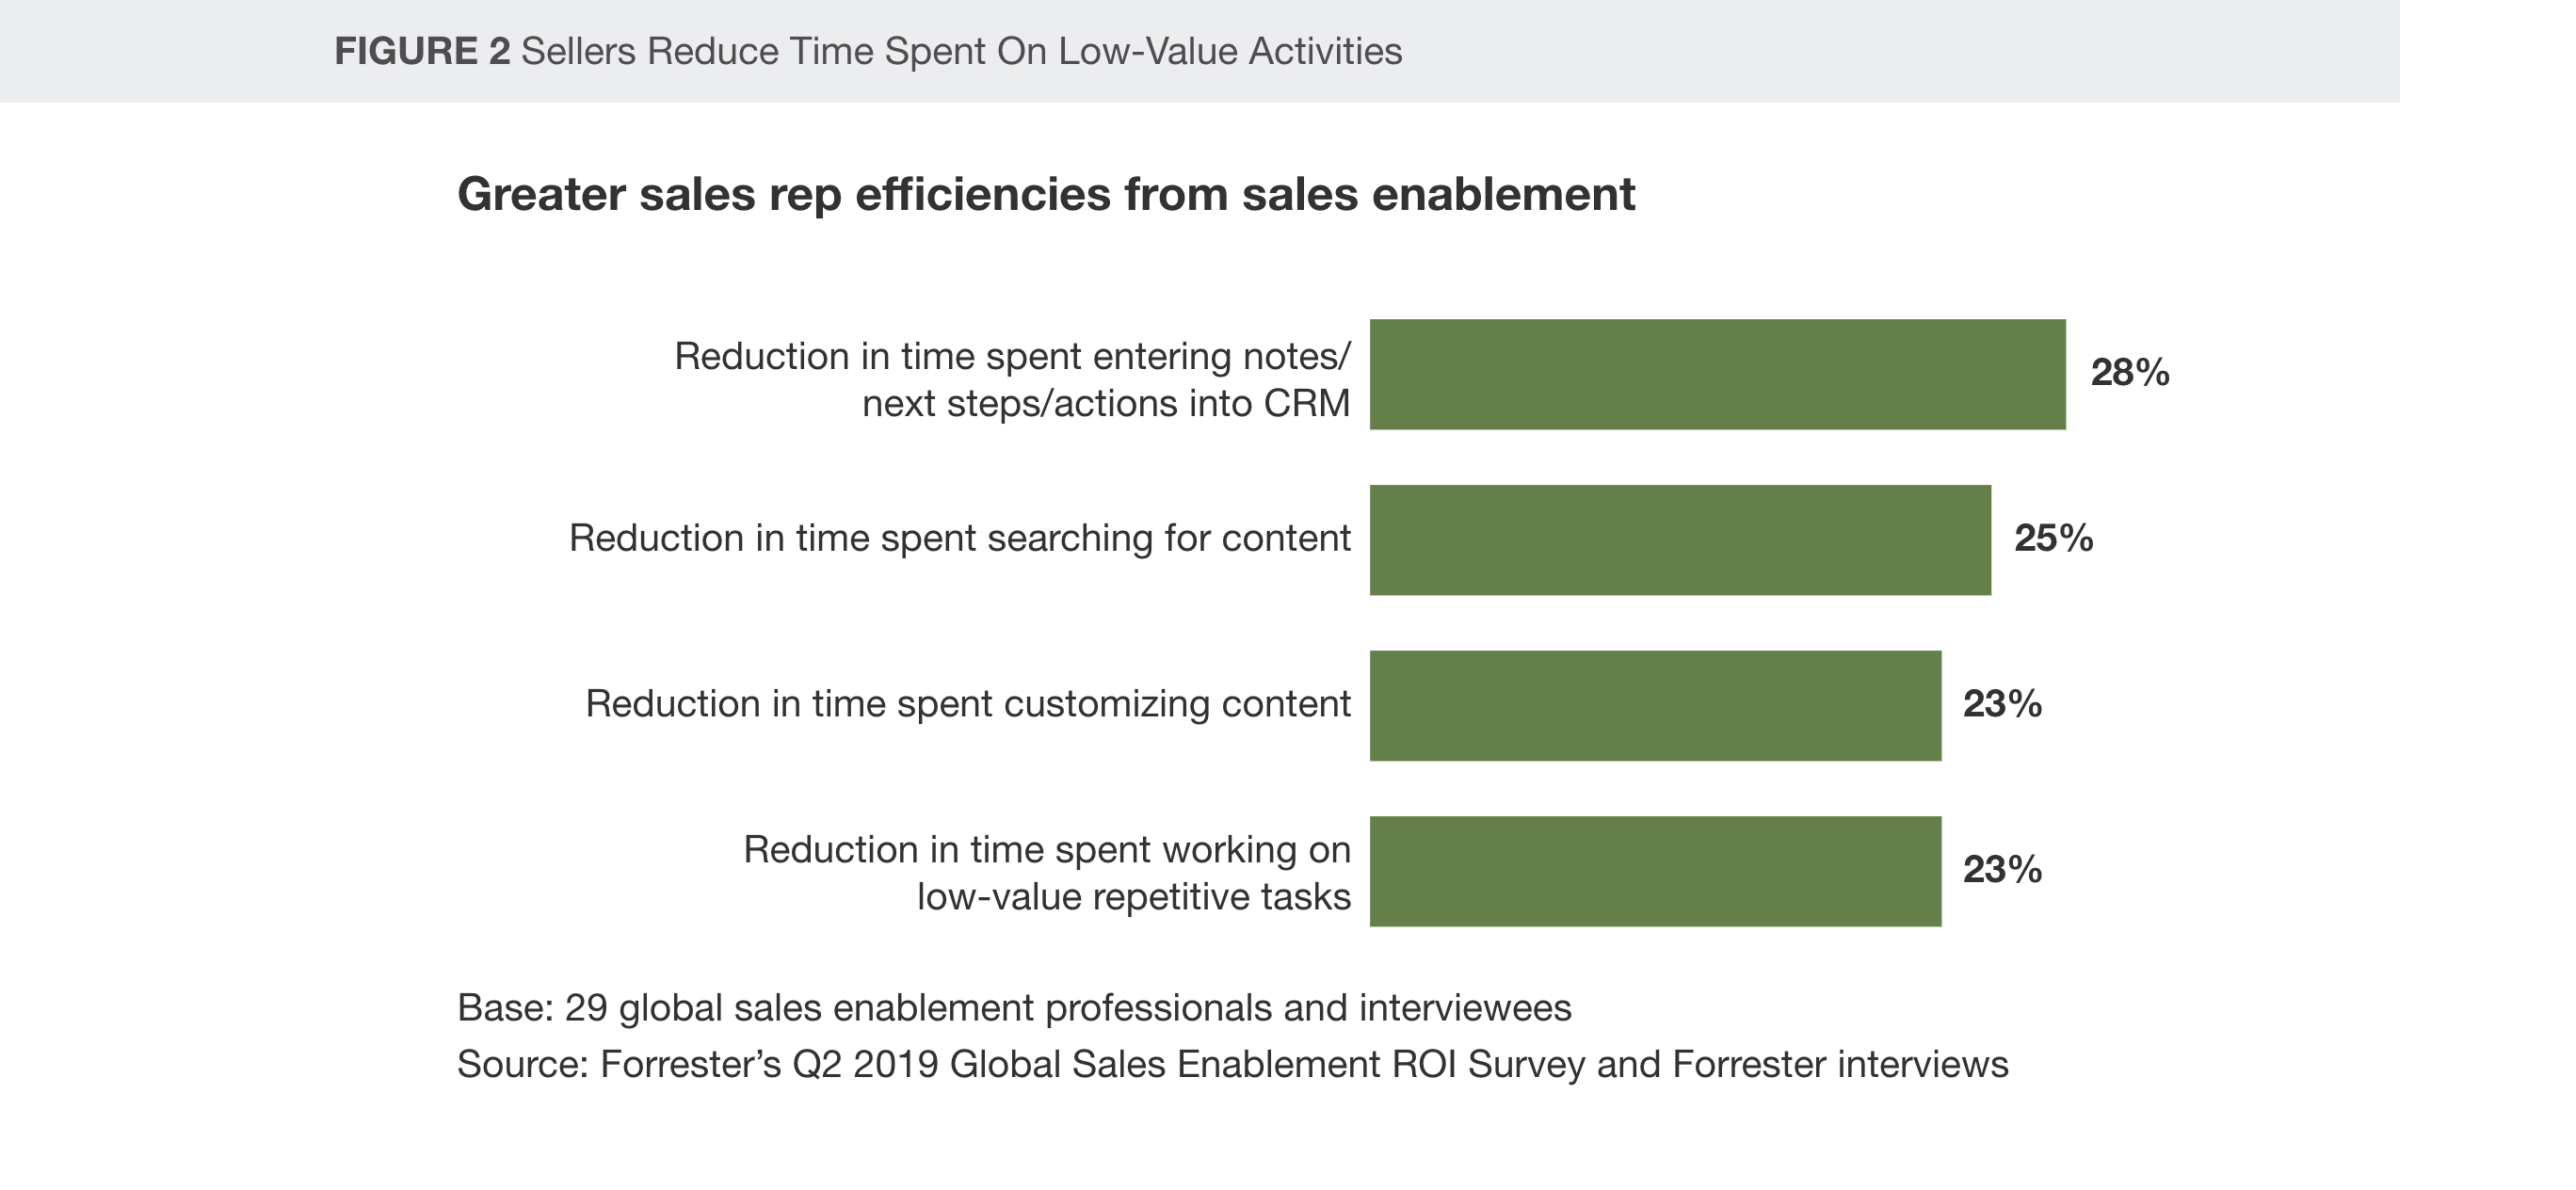 greater sales rep efficiencies from sales enablement